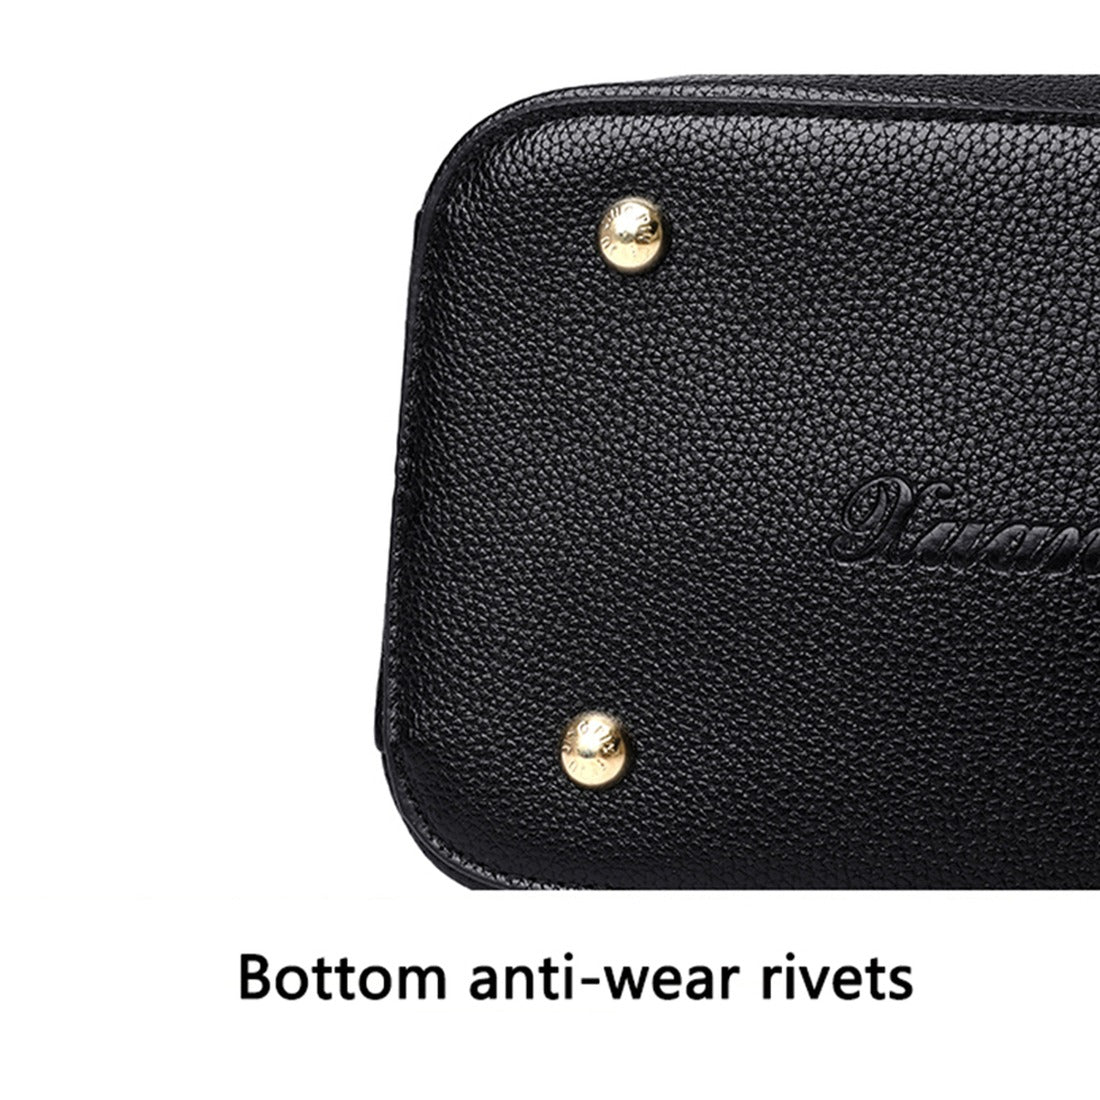 Luxury Designer Top Handle Handbag For Women | Casual Crossbody Tote Shoulder Bag